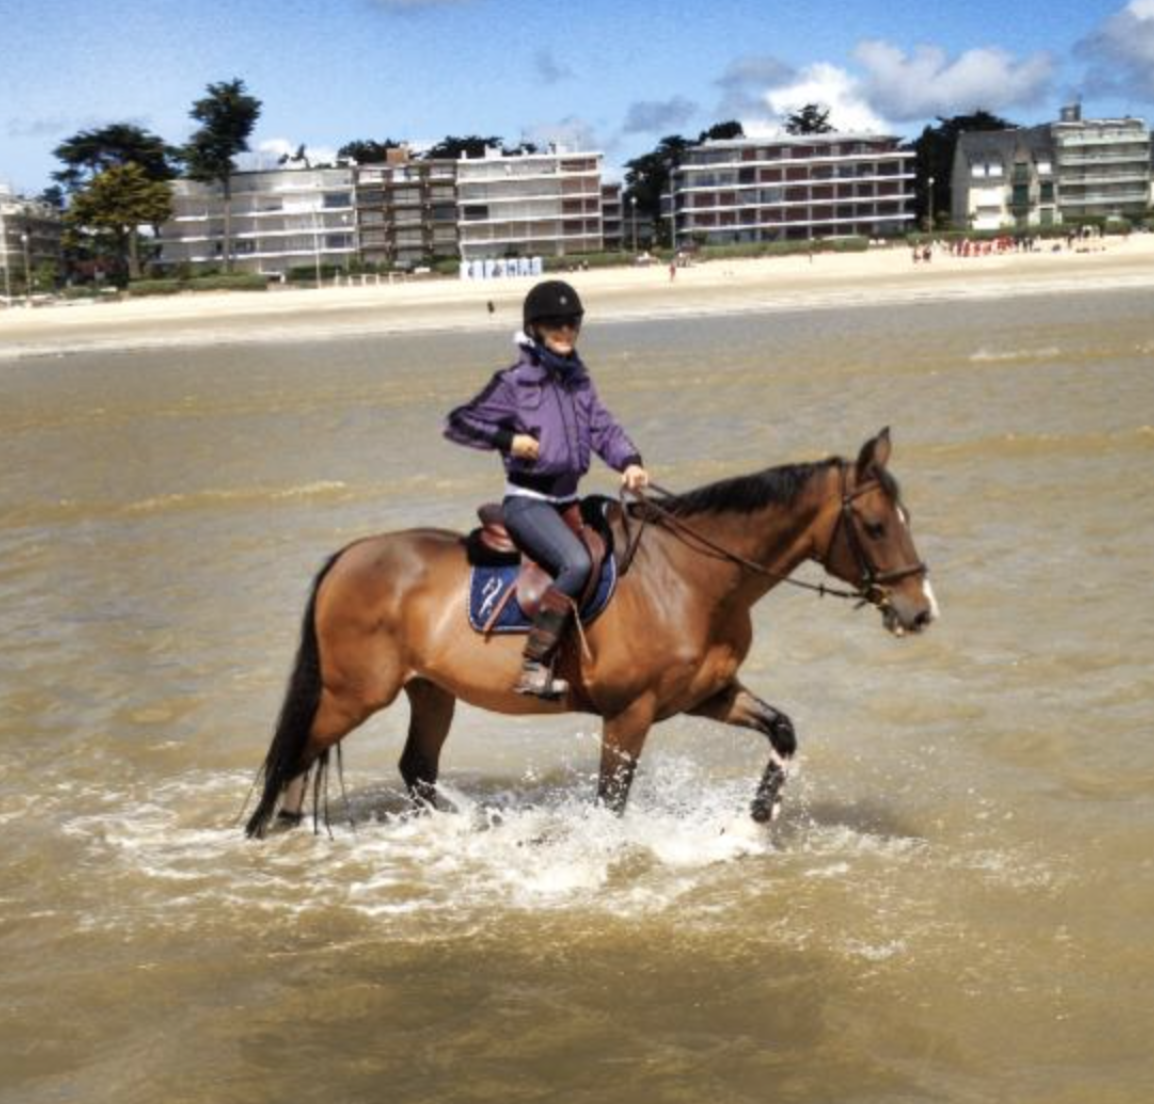 Kaylen Spooner rides Cristallo on the beach in France. Photo: Richard Spooner